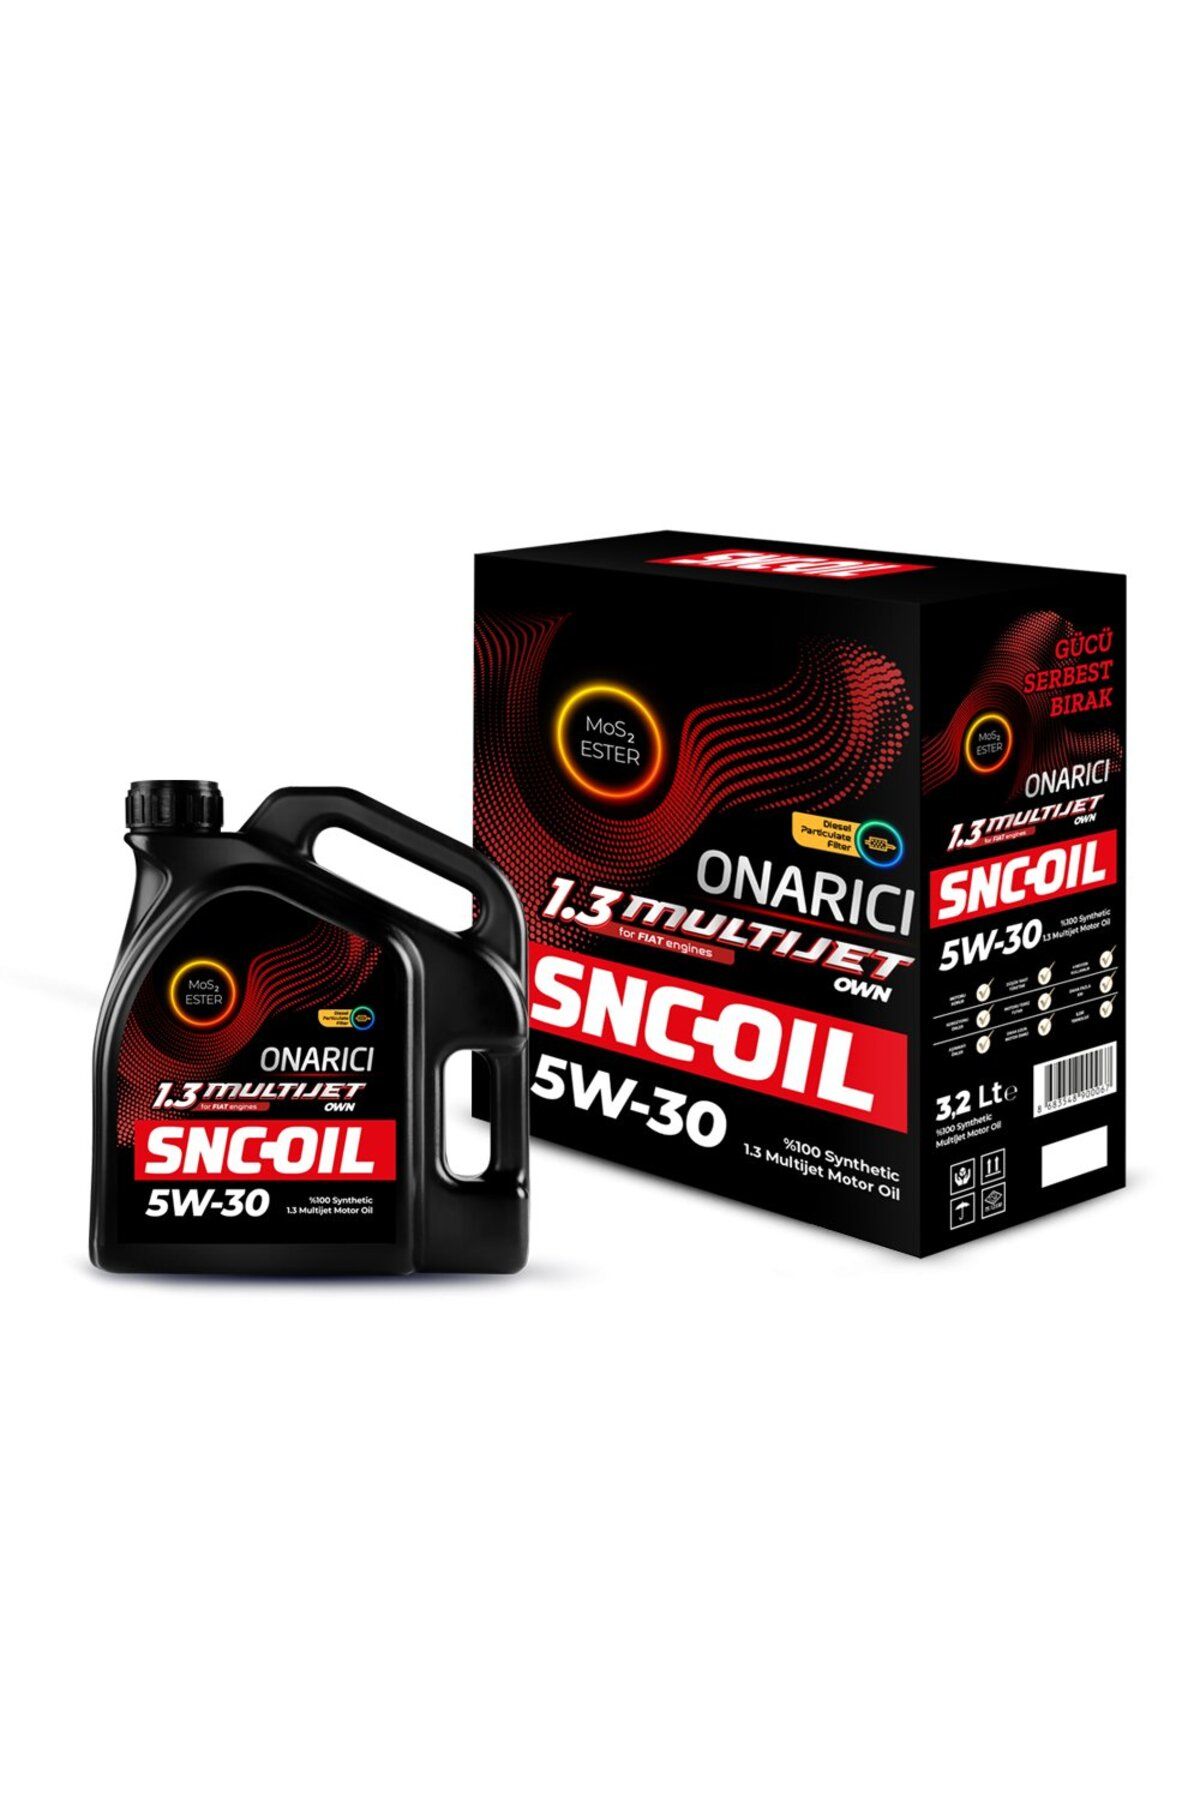 snc Icon Group - SNC-OIL Pro-S Plus 1.3 Multijet Onarıcı 5W-30 Motor Yağı 3.2 Litre